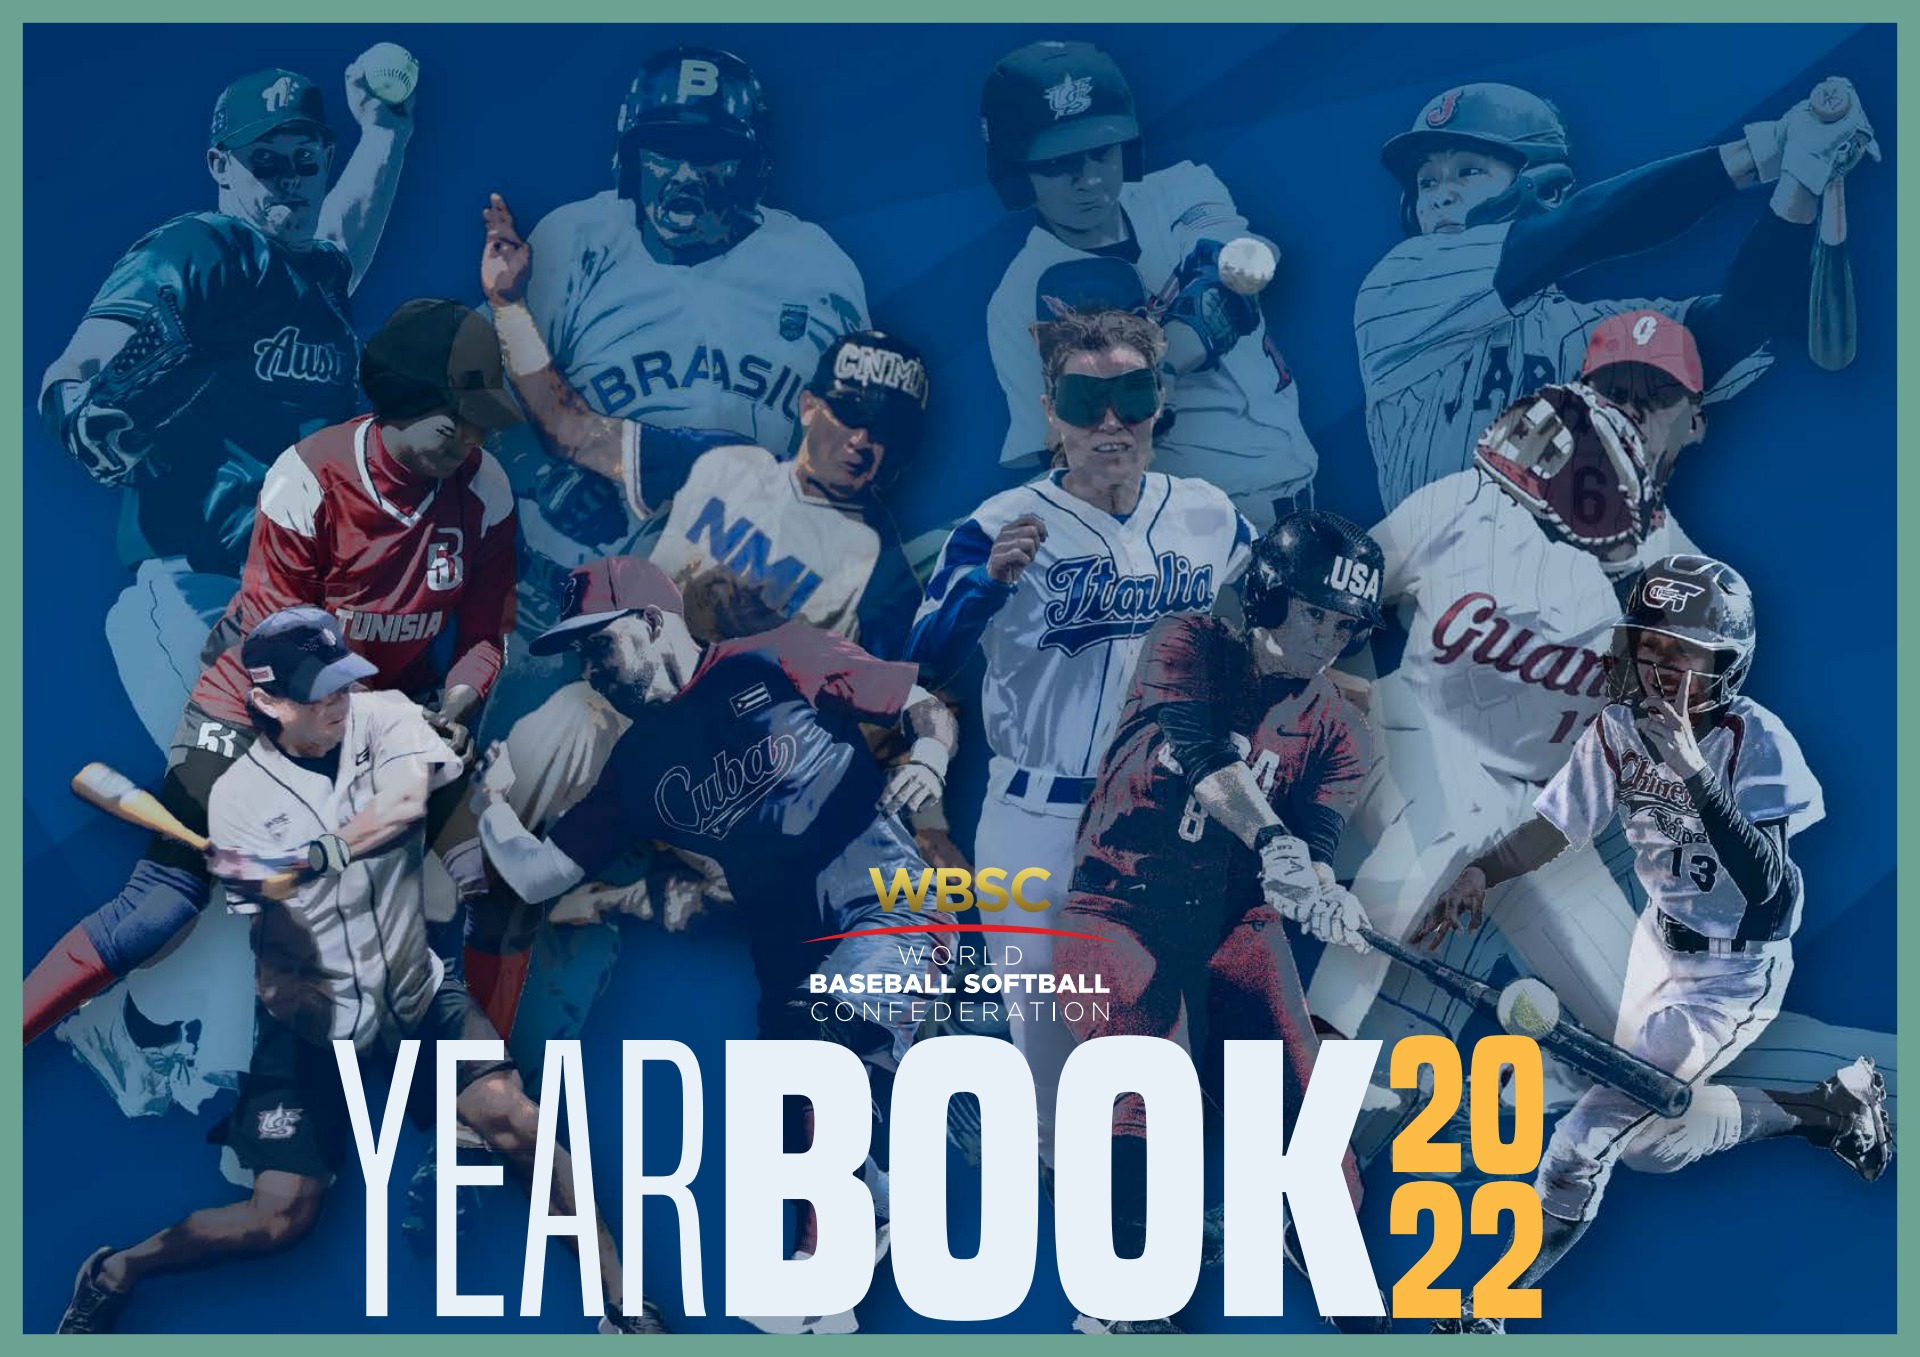 WBCS Yearbook 2022